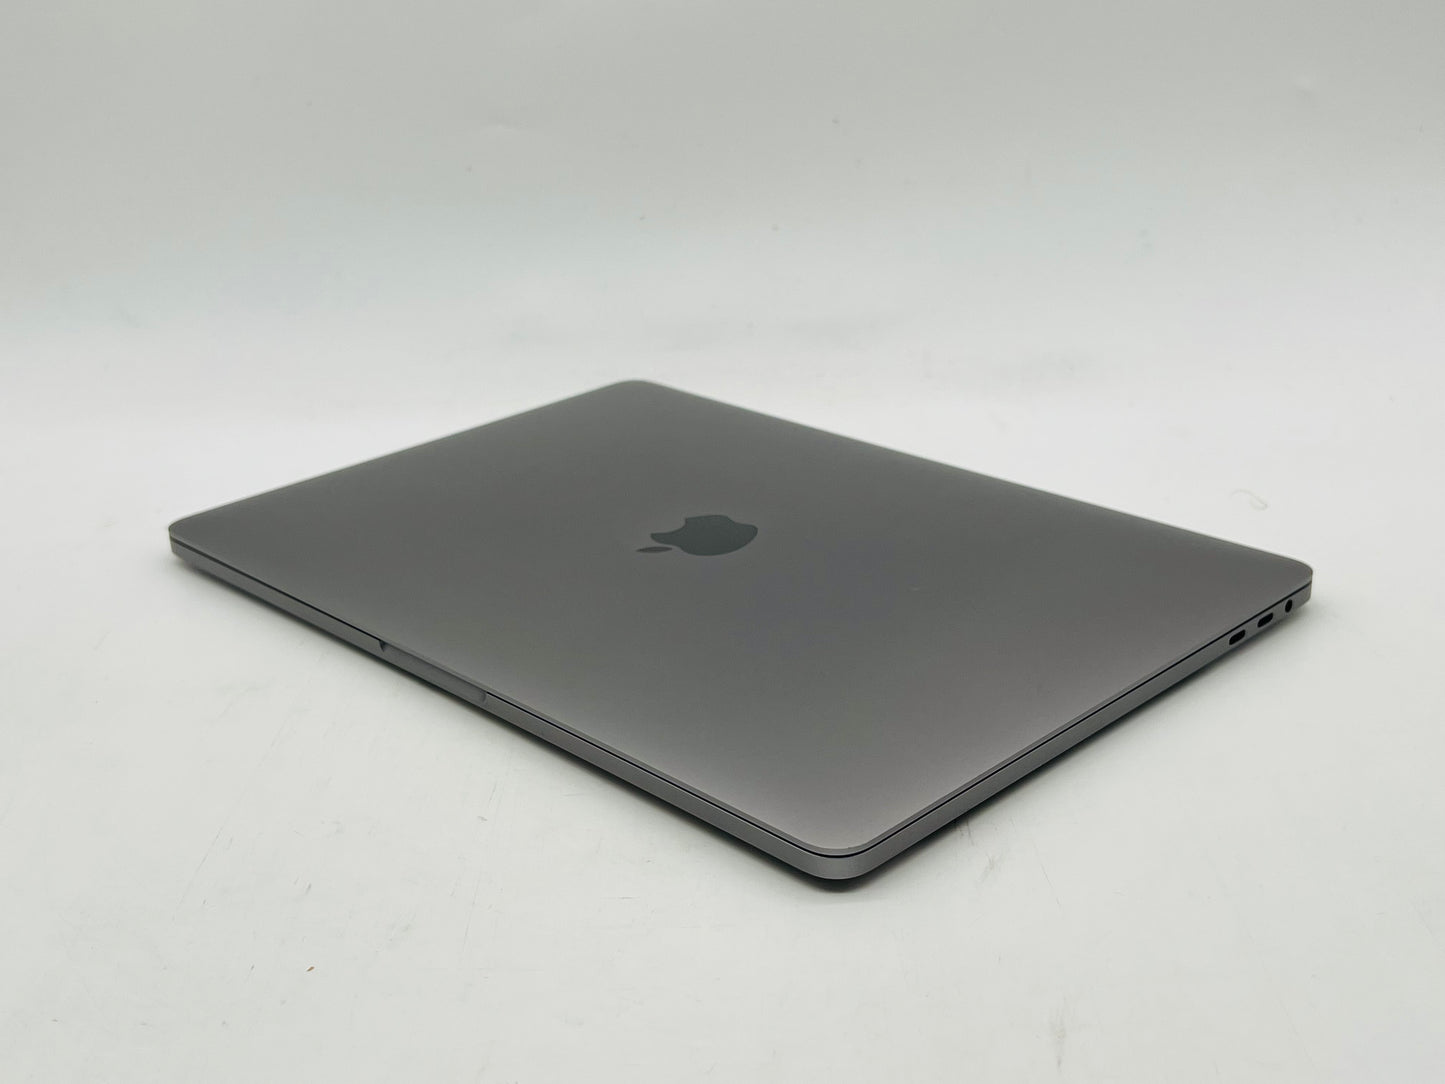 Apple 2019 MacBook Pro 13 in TB 2.8GHz Quad-Core i7 16GB RAM 1TB SSD IIPG 655